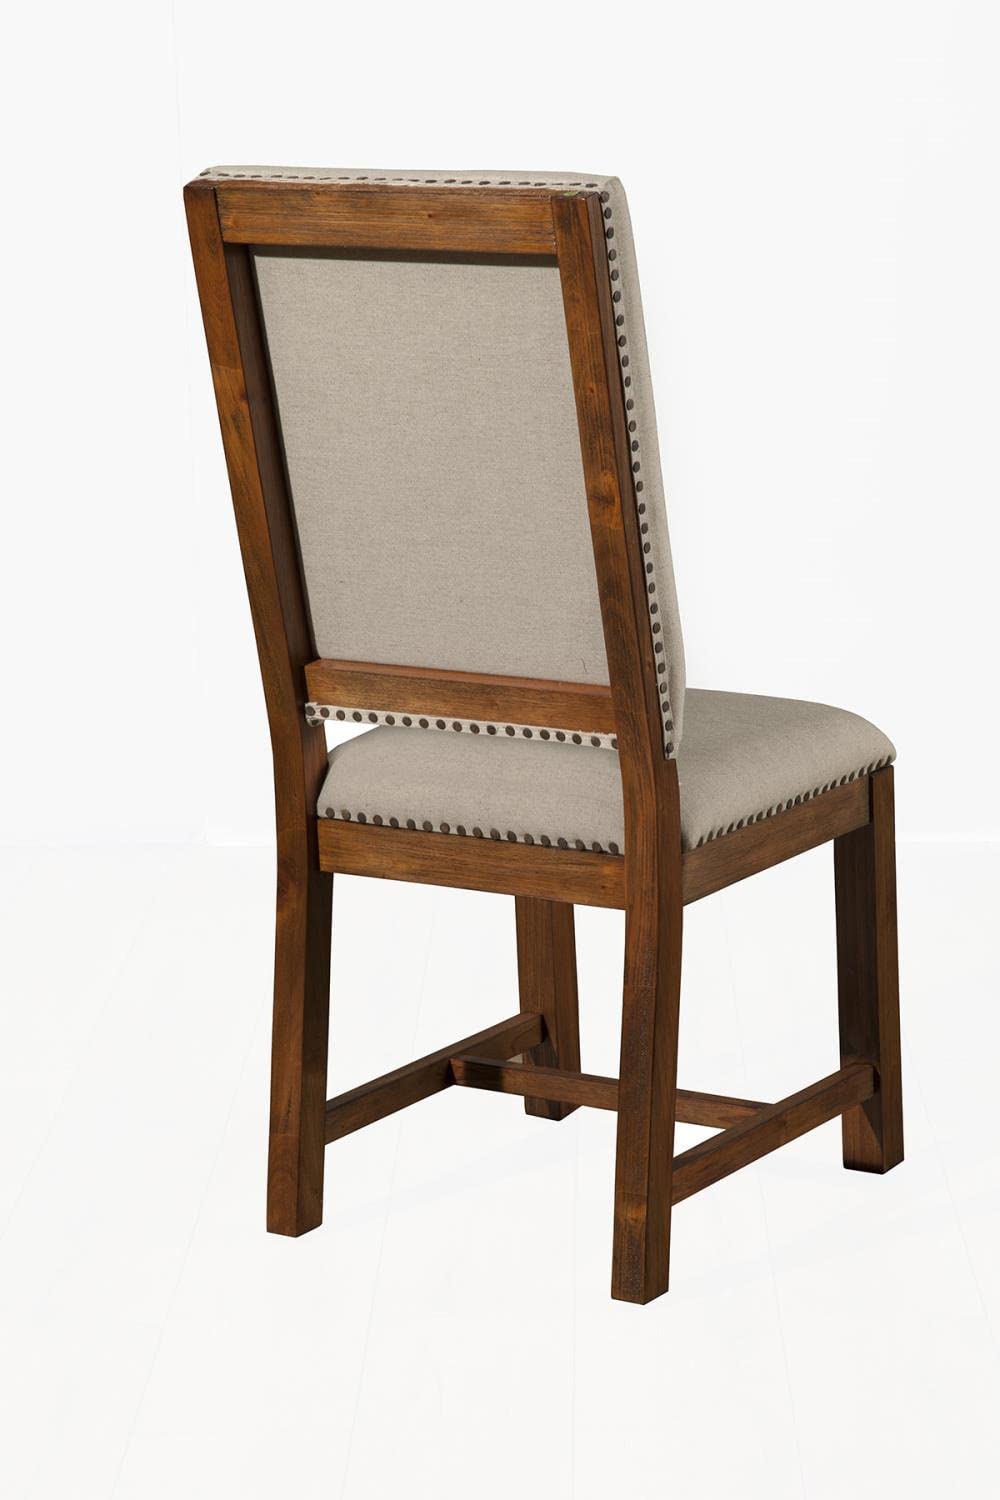 Alpine Furniture Aspen Dining Chair, 2, Natural Mahogany